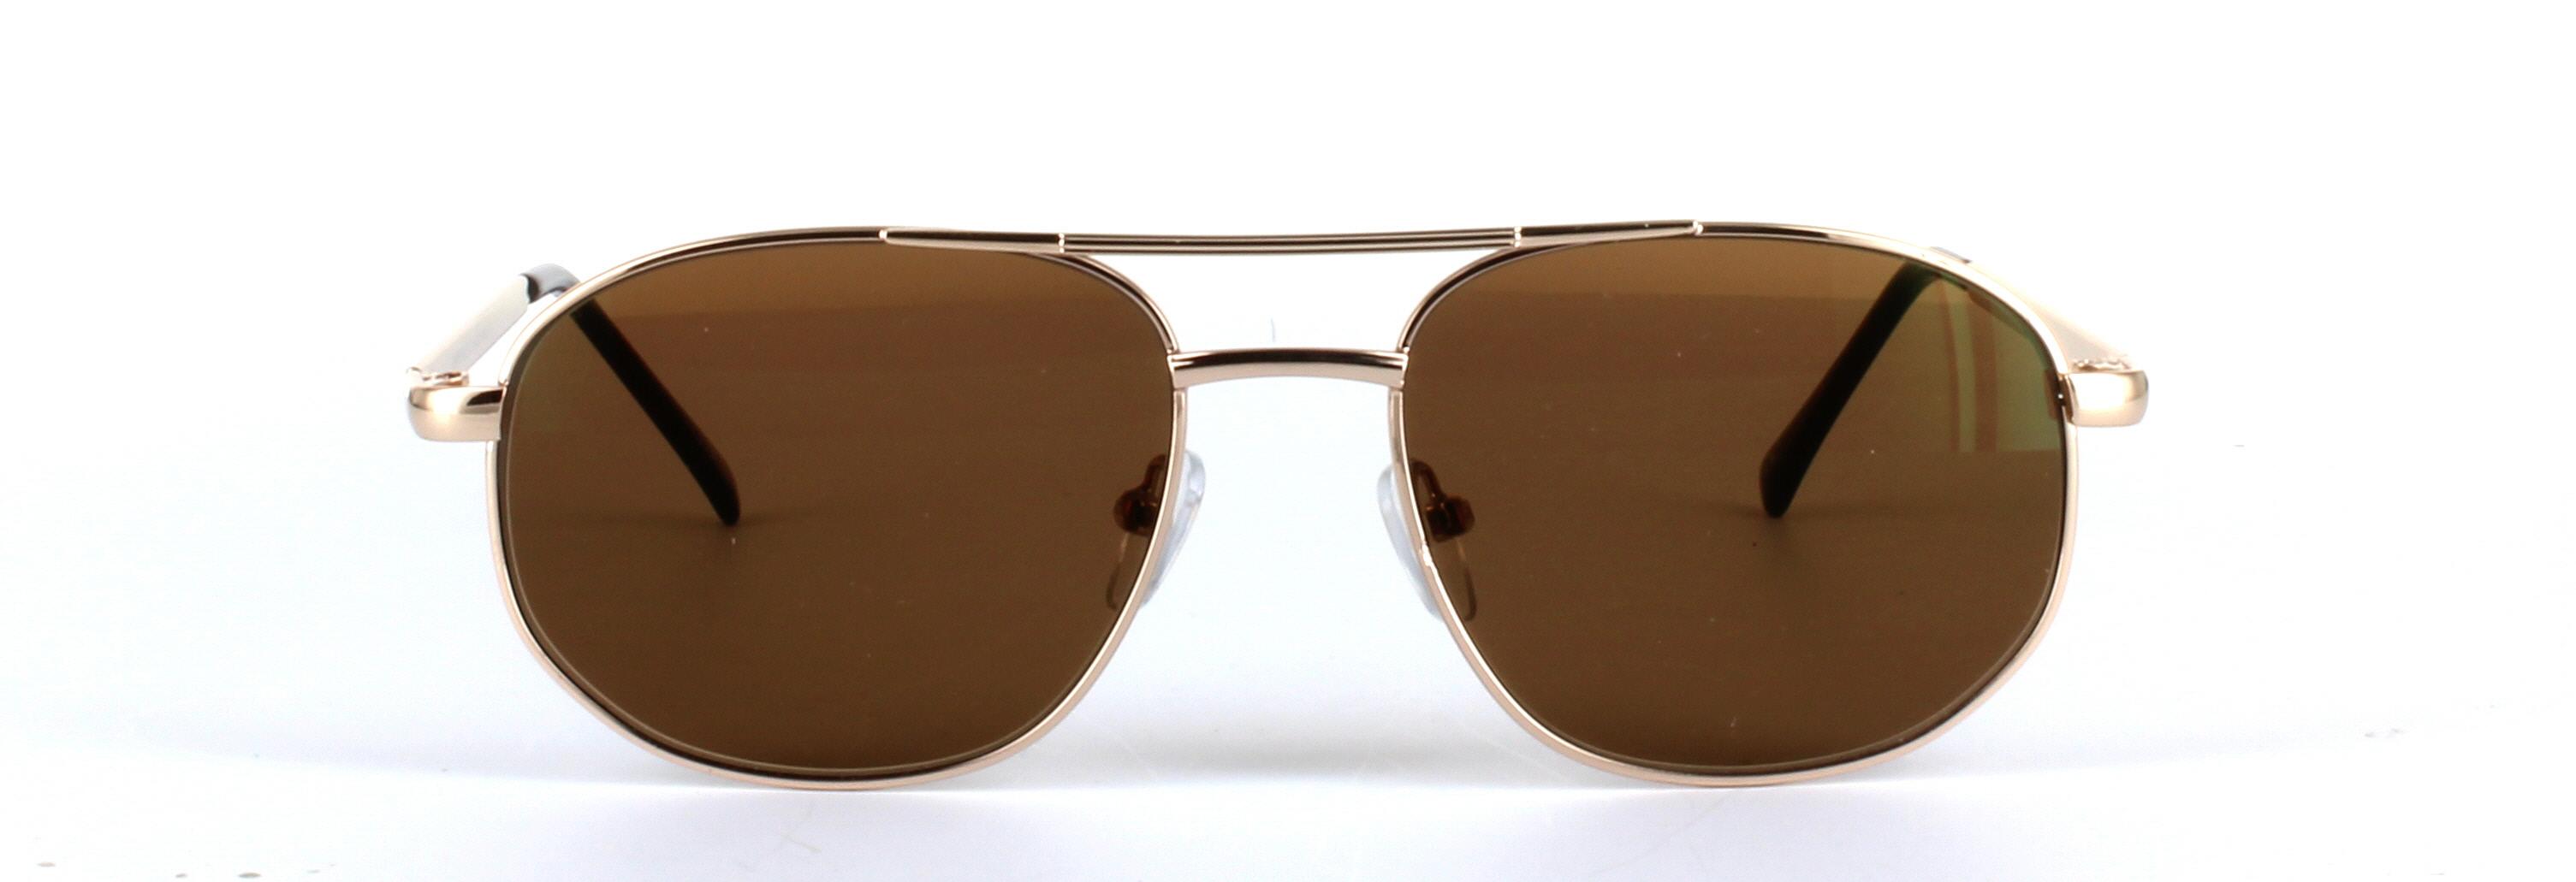 Spartan Sunglasses | Cheap Glasses Online | Glasses2You